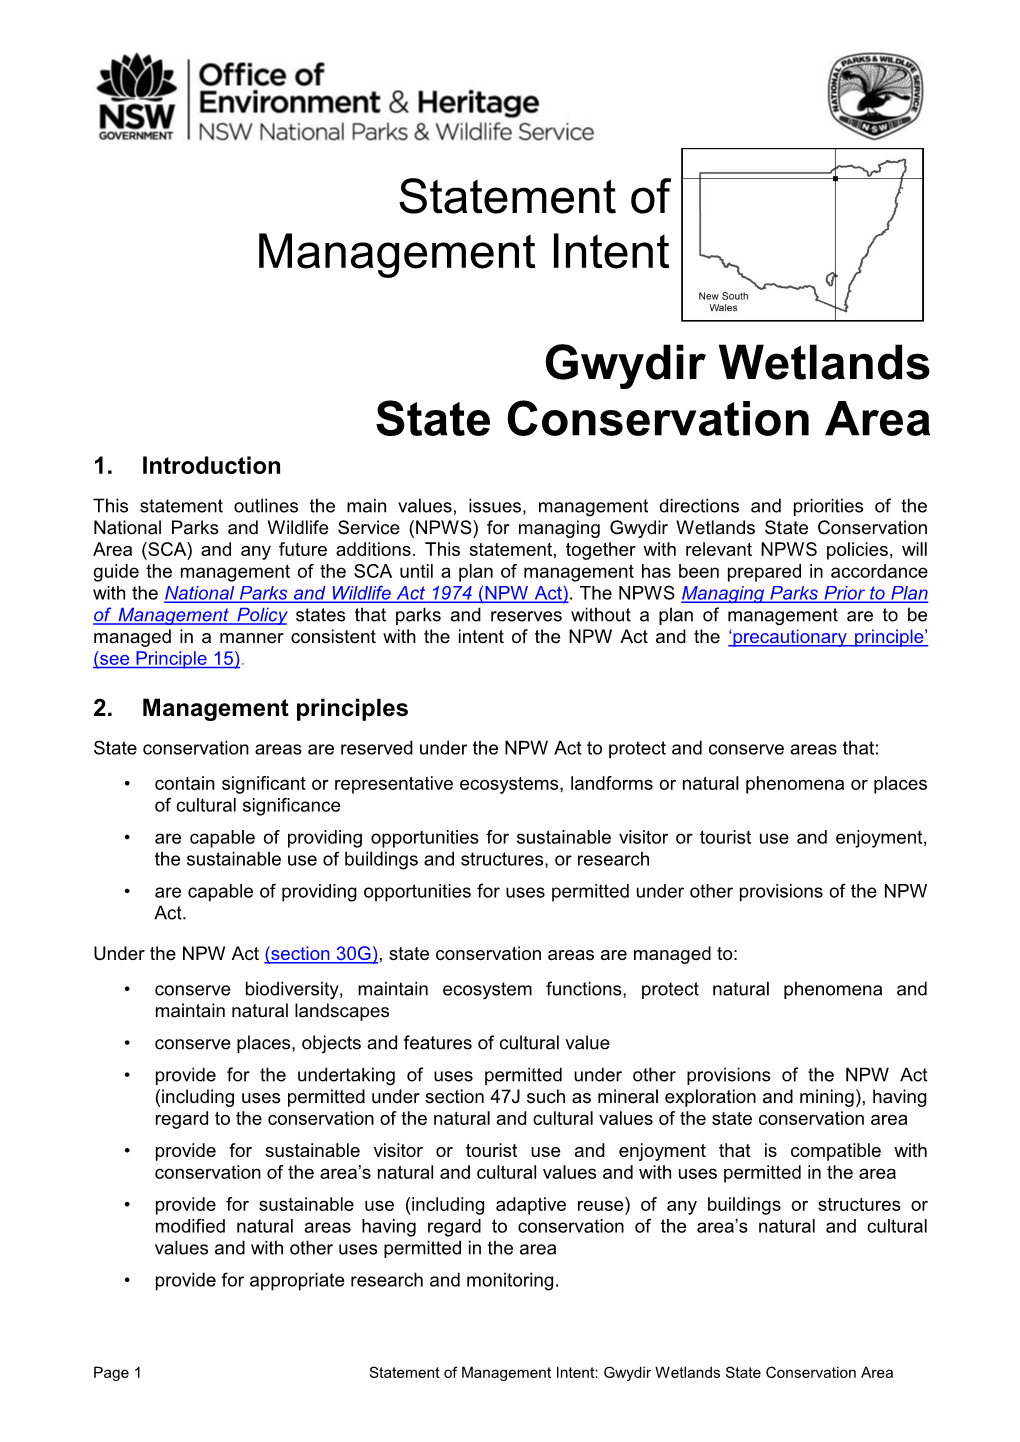 Gwydir Wetlands State Conservation Area Statement of Management